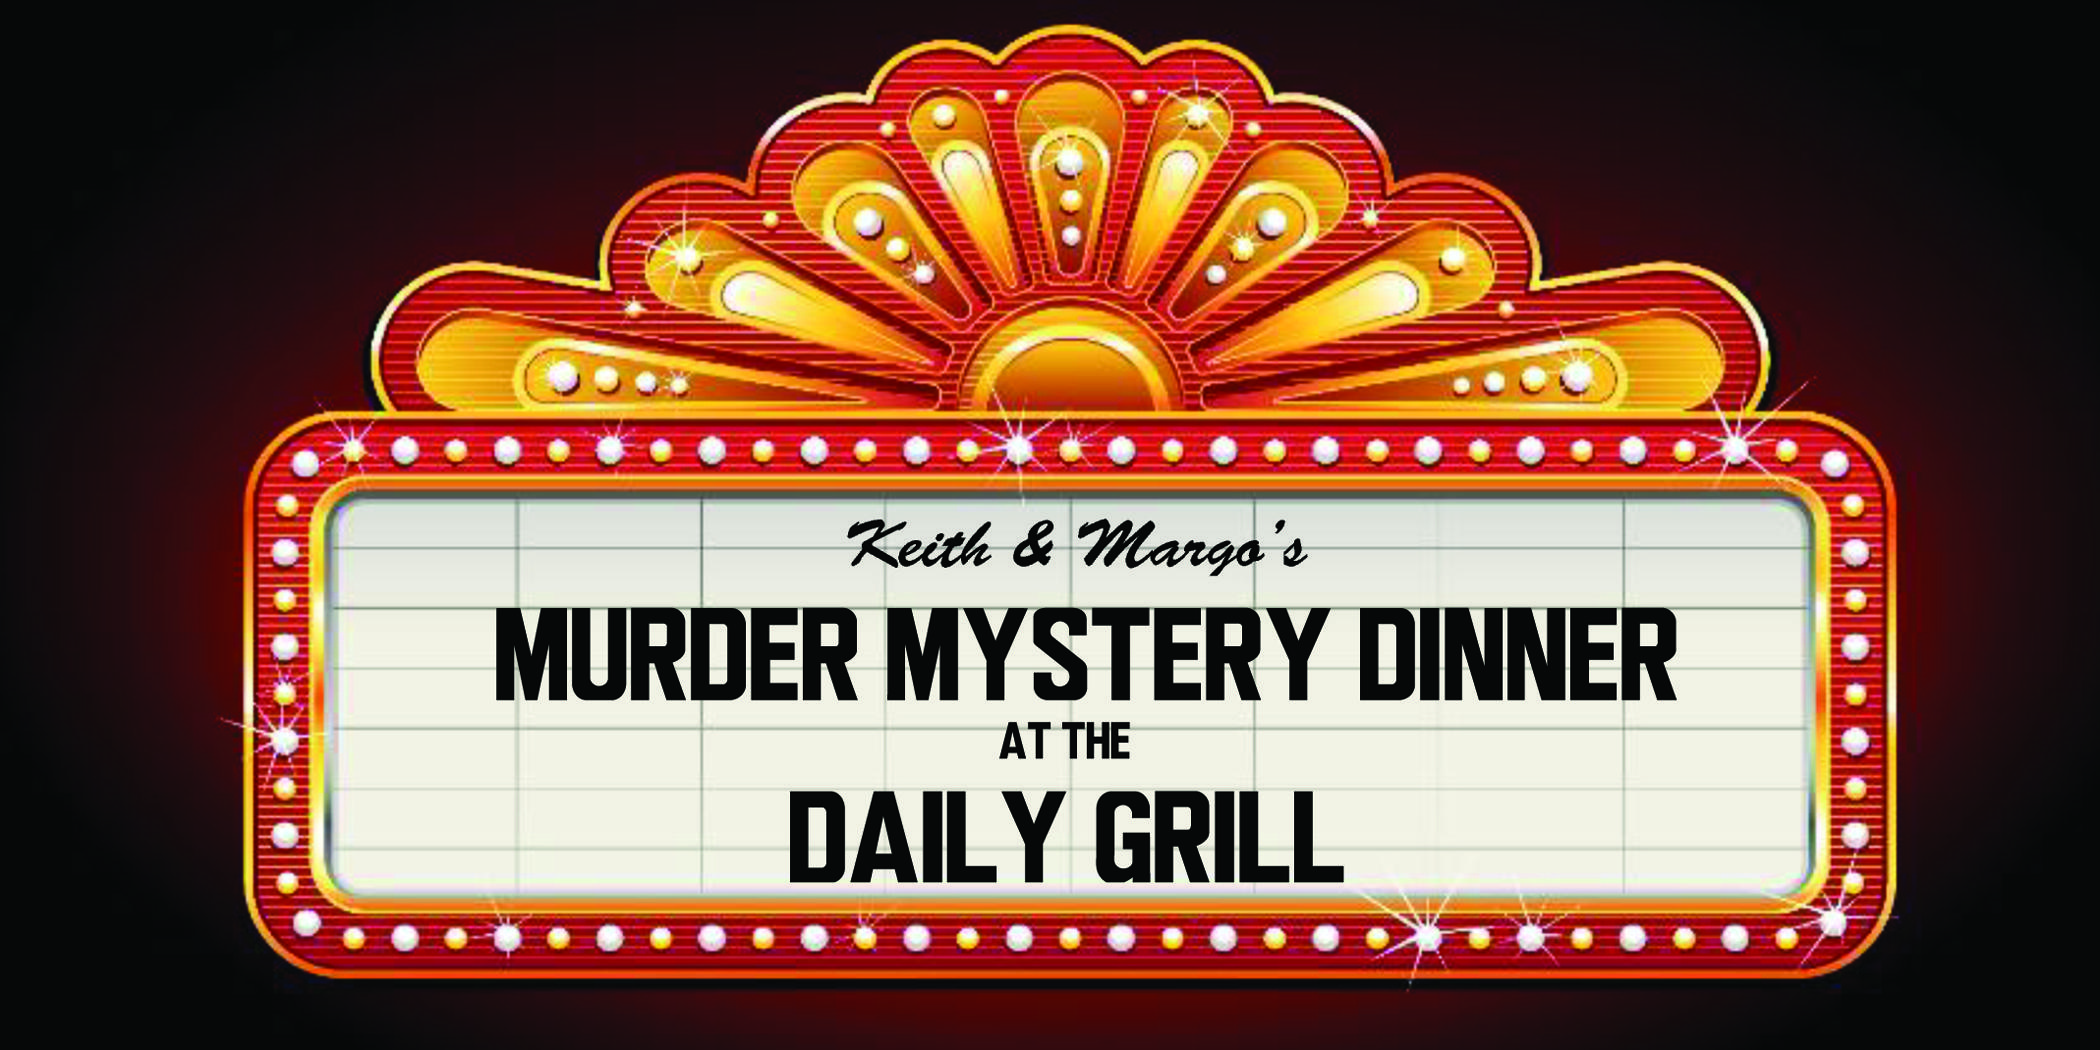 Keith & Margo's Murder Mystery Dinner - Daily Grill, Santa Monica